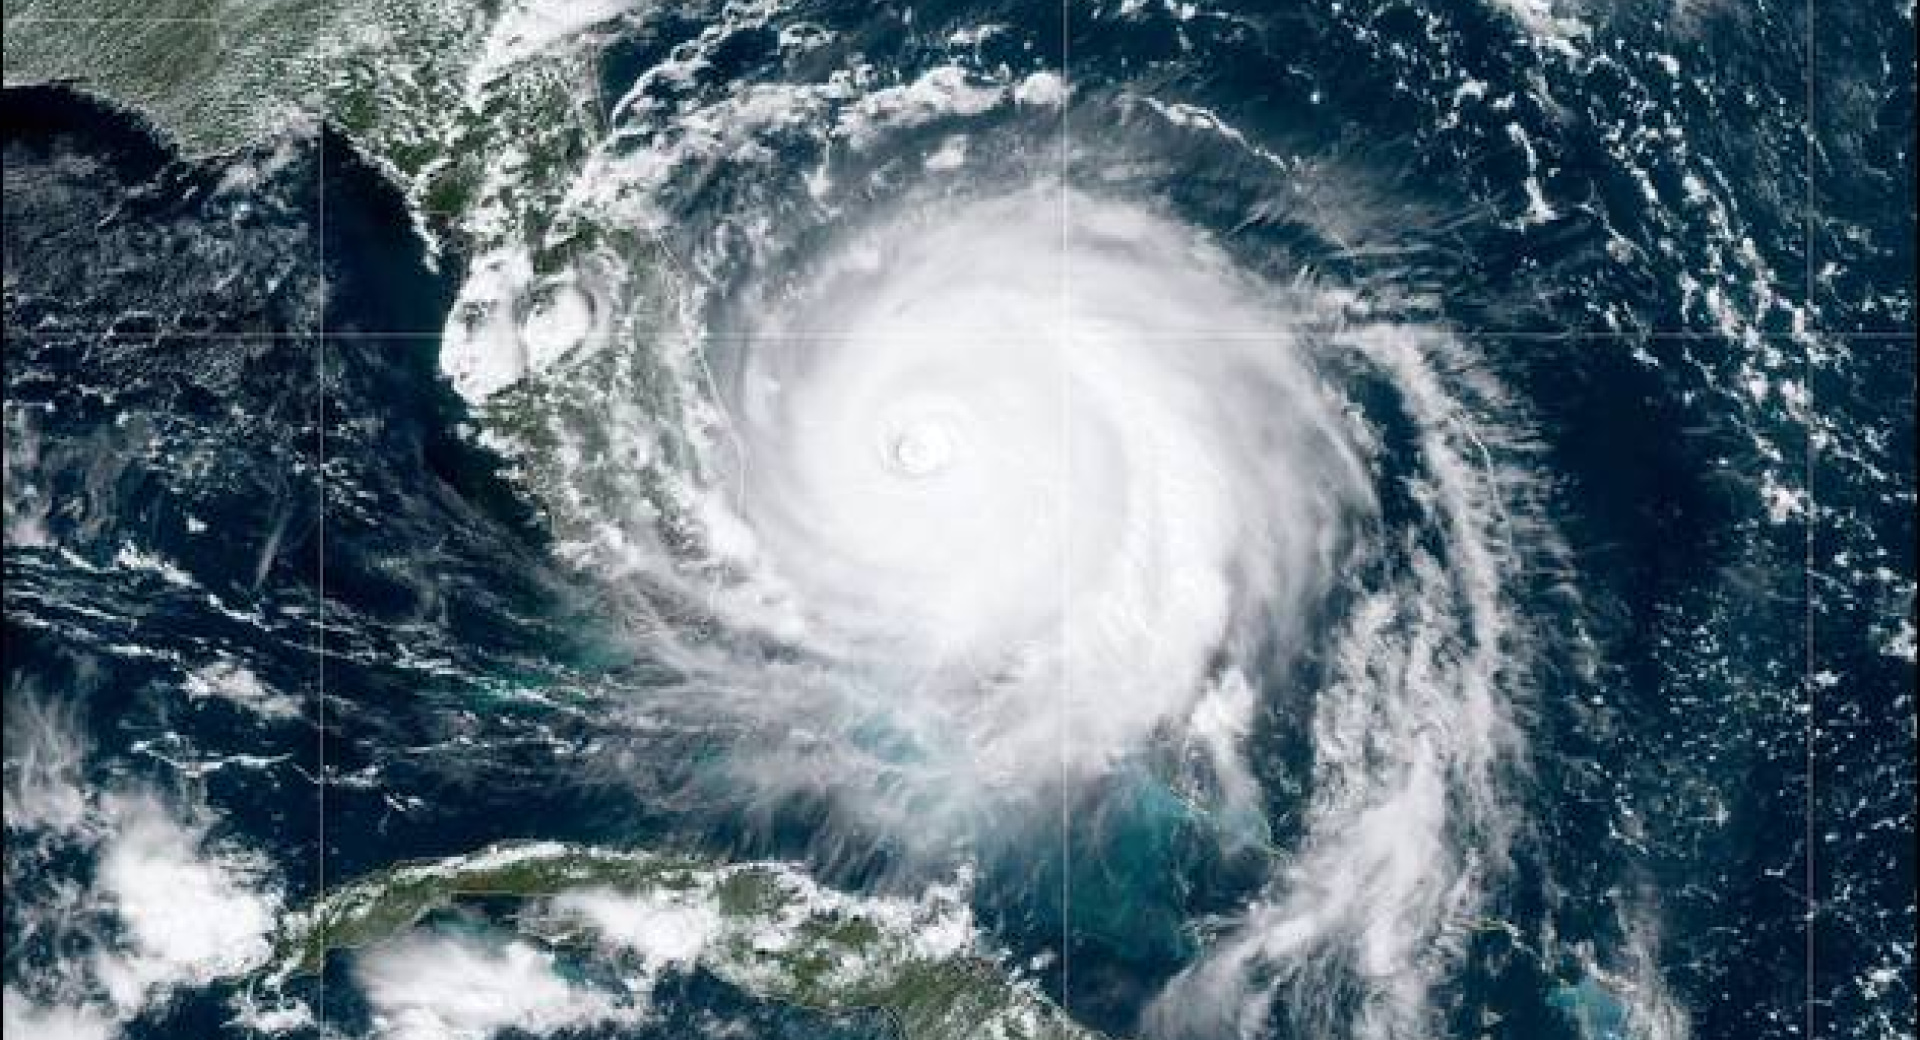 Support the Bahamas following the devastation of Hurricane Dorian